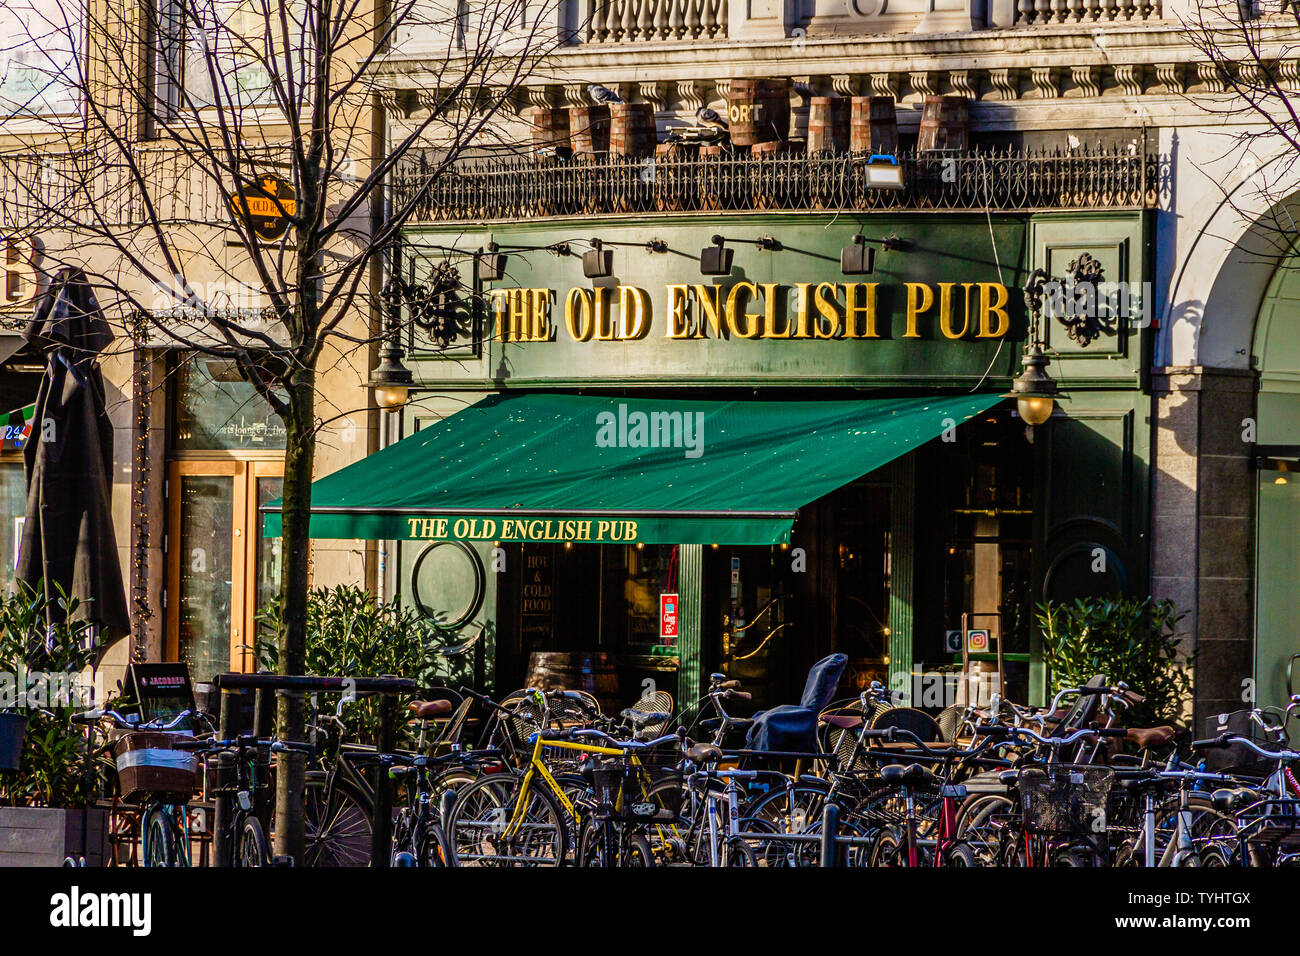 The Old English Pub, a themed bar on Vesterbrogade in Copenhagen, Denmark. 2019. Stock Photo